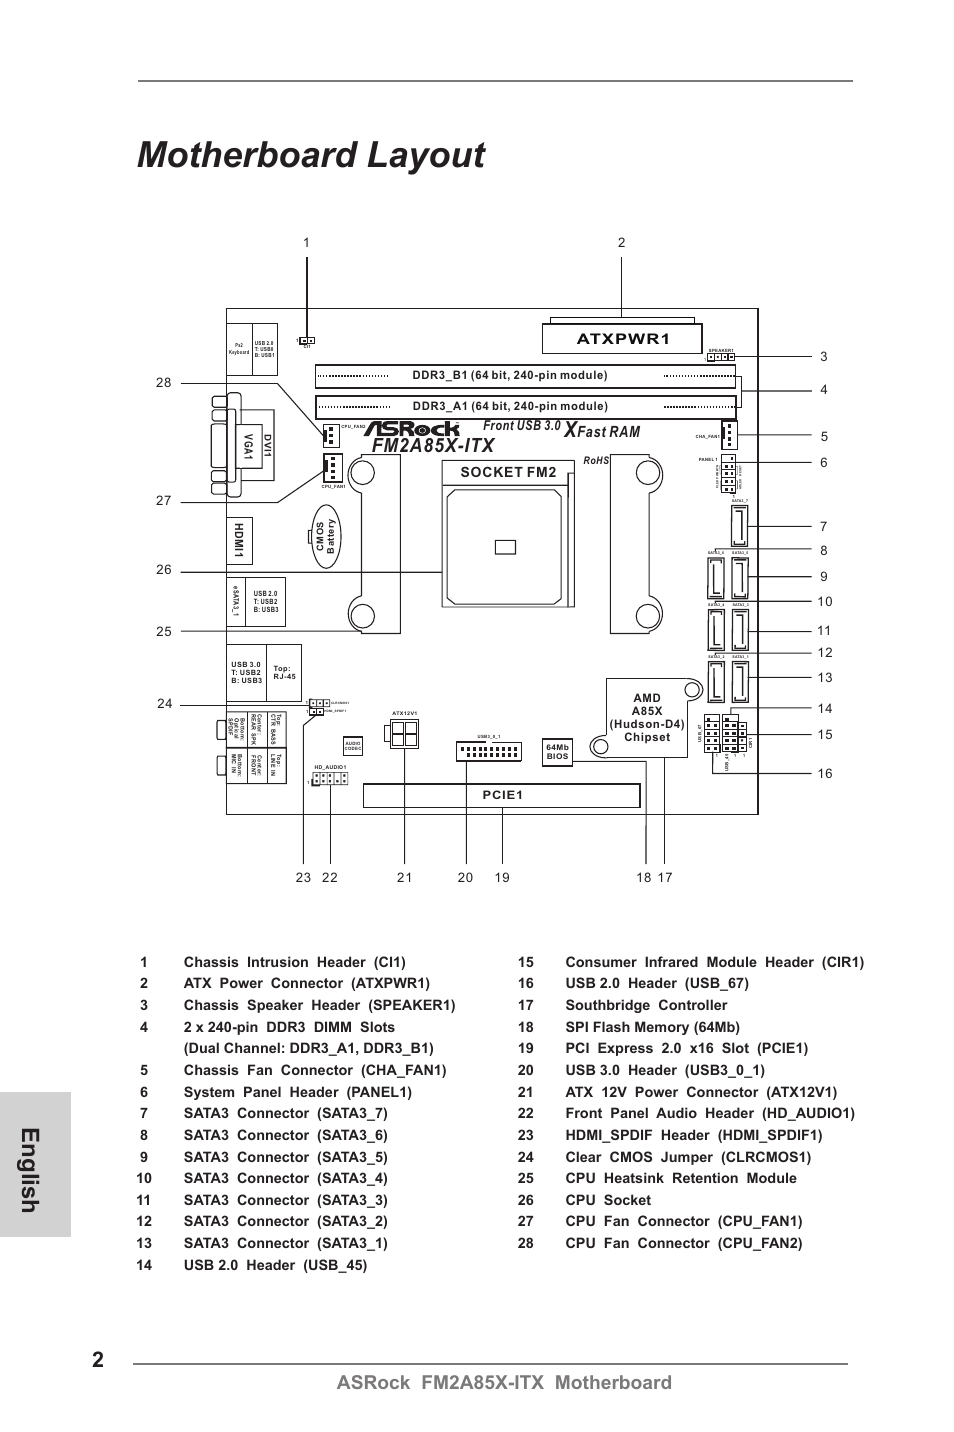 Motherboard layout, English, Asrock fm2a85x-itx motherboard | ASRock